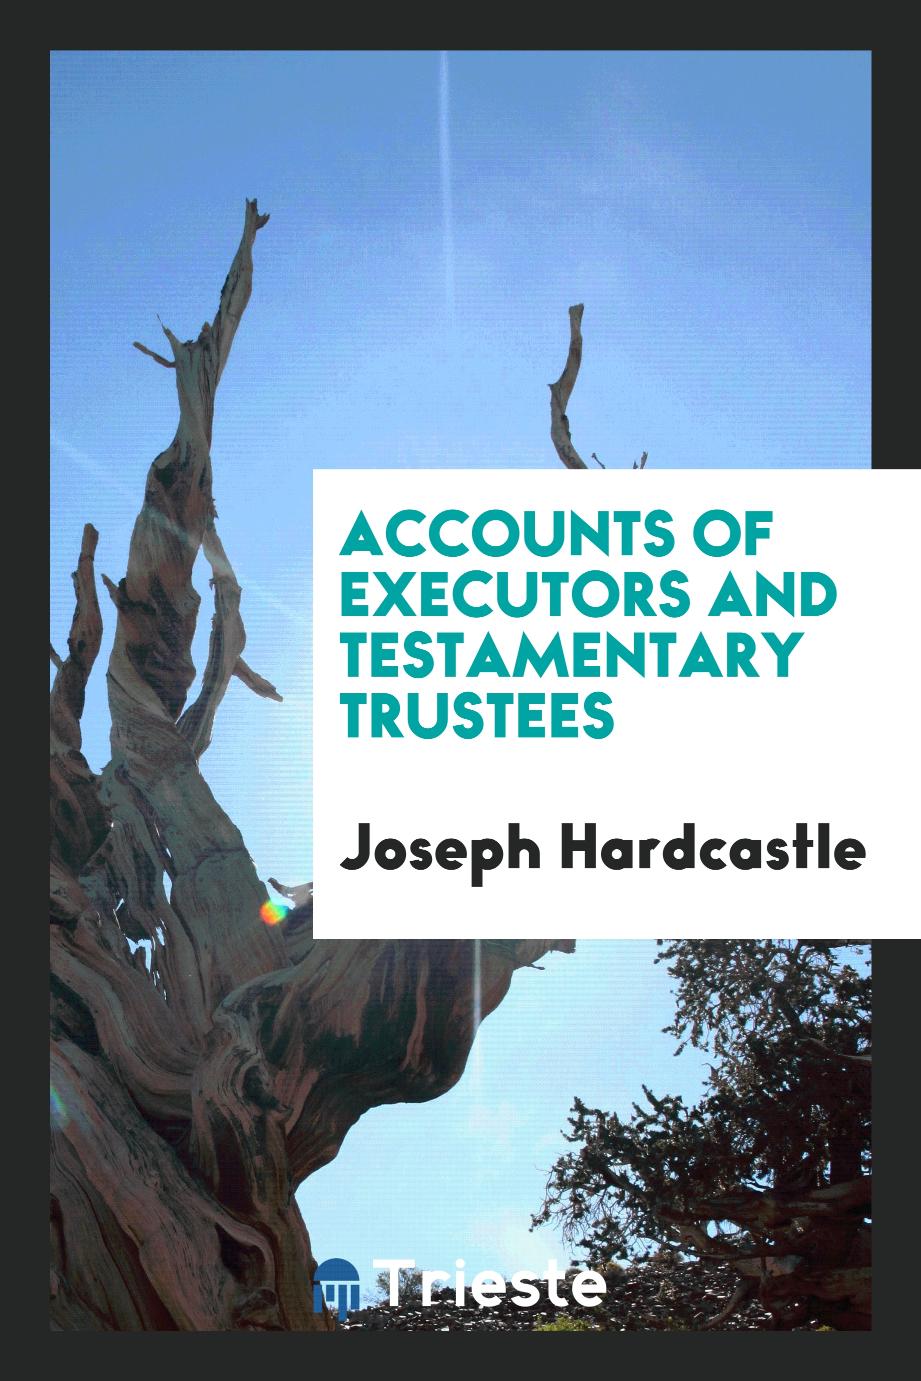 Accounts of Executors and Testamentary Trustees